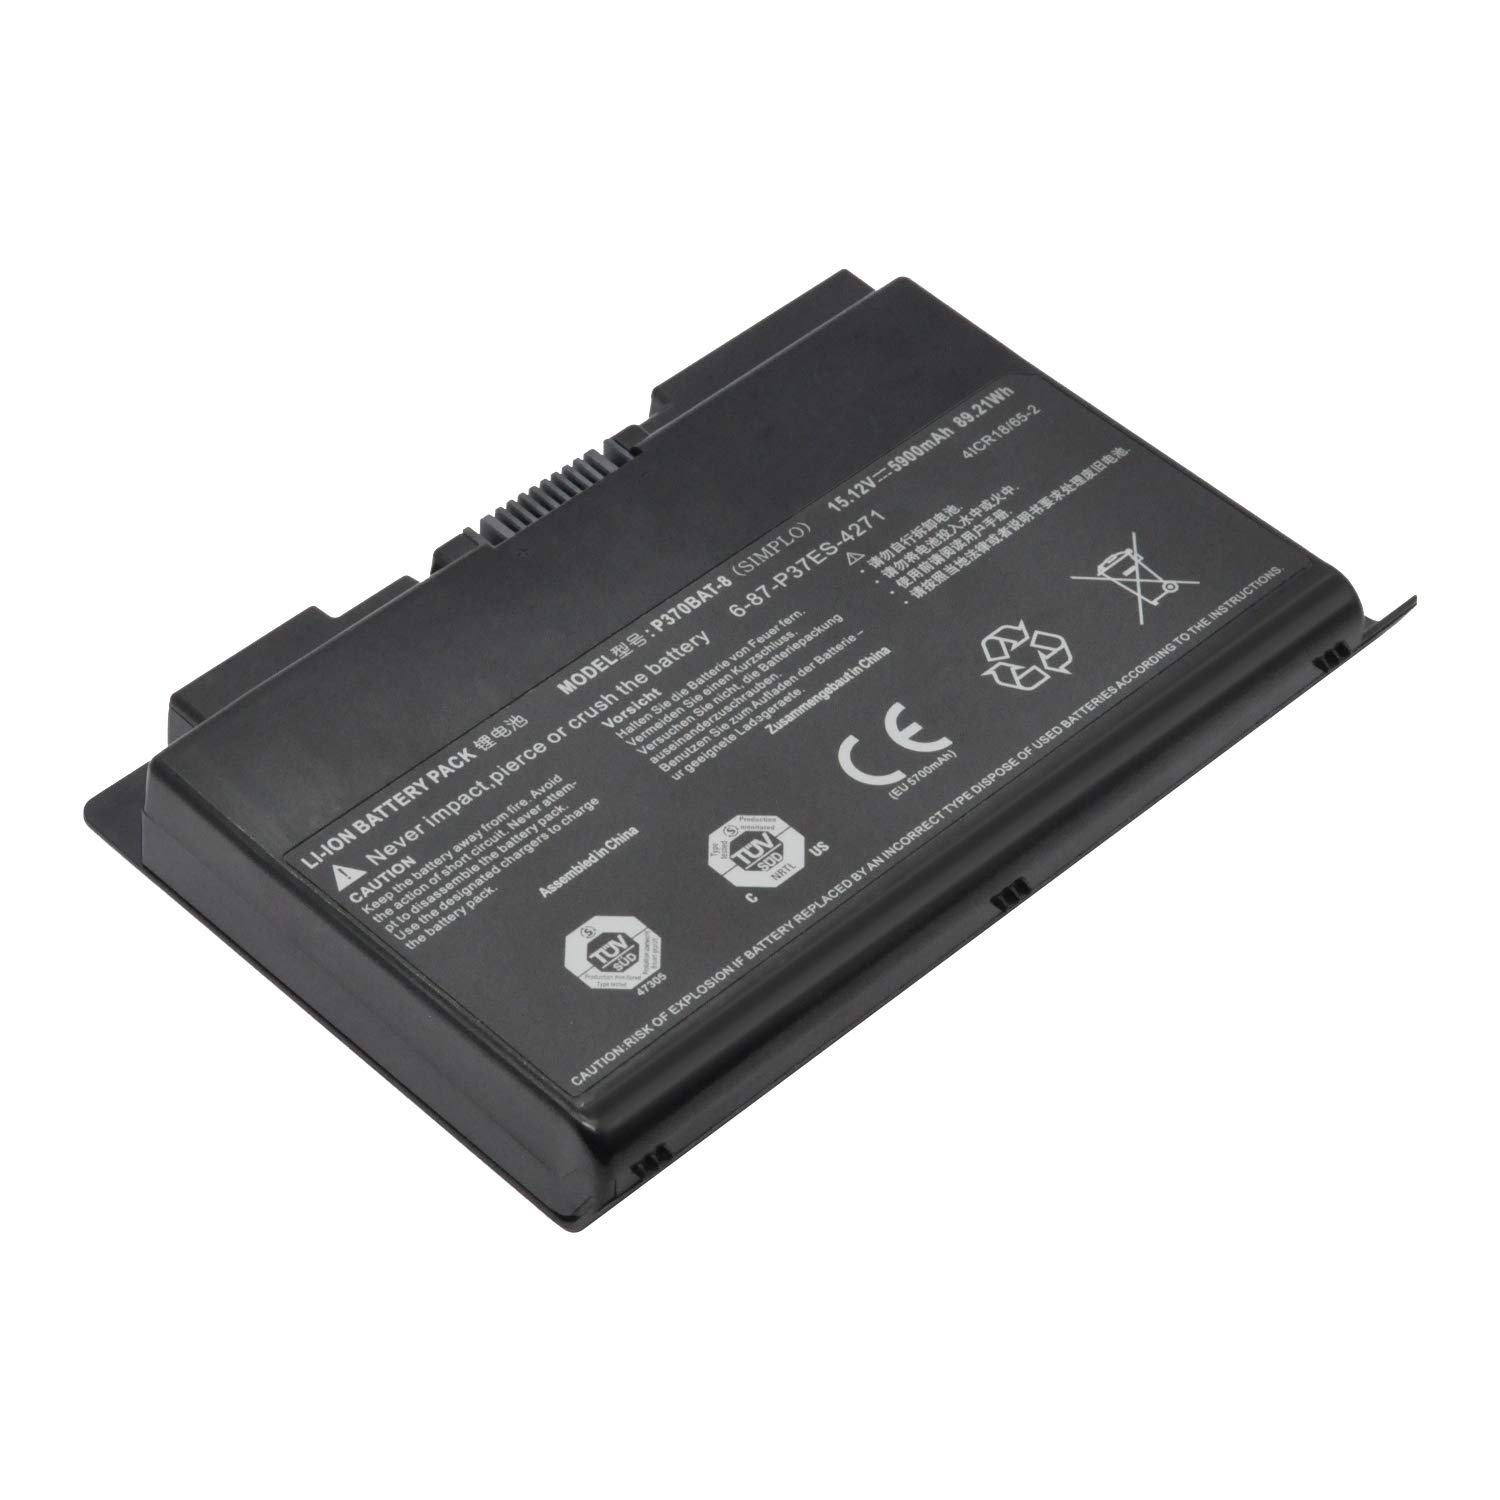 clevo p370sm3 series laptop battery